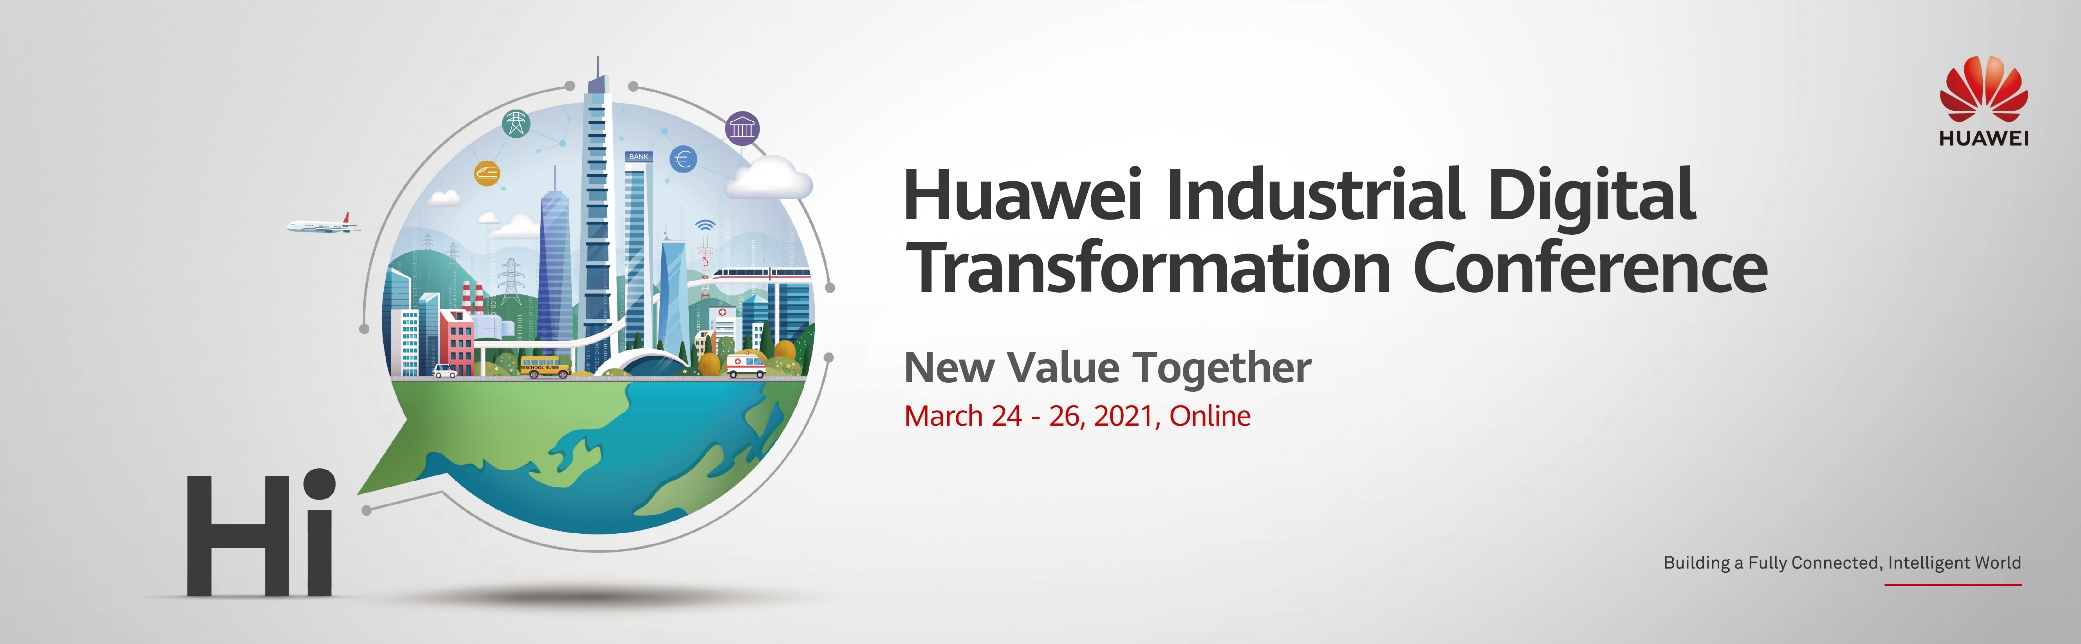 Huawei: Συνέδριο για την ψηφιακή μετάβαση της βιομηχανίας στις 24-26 Μαρτίου